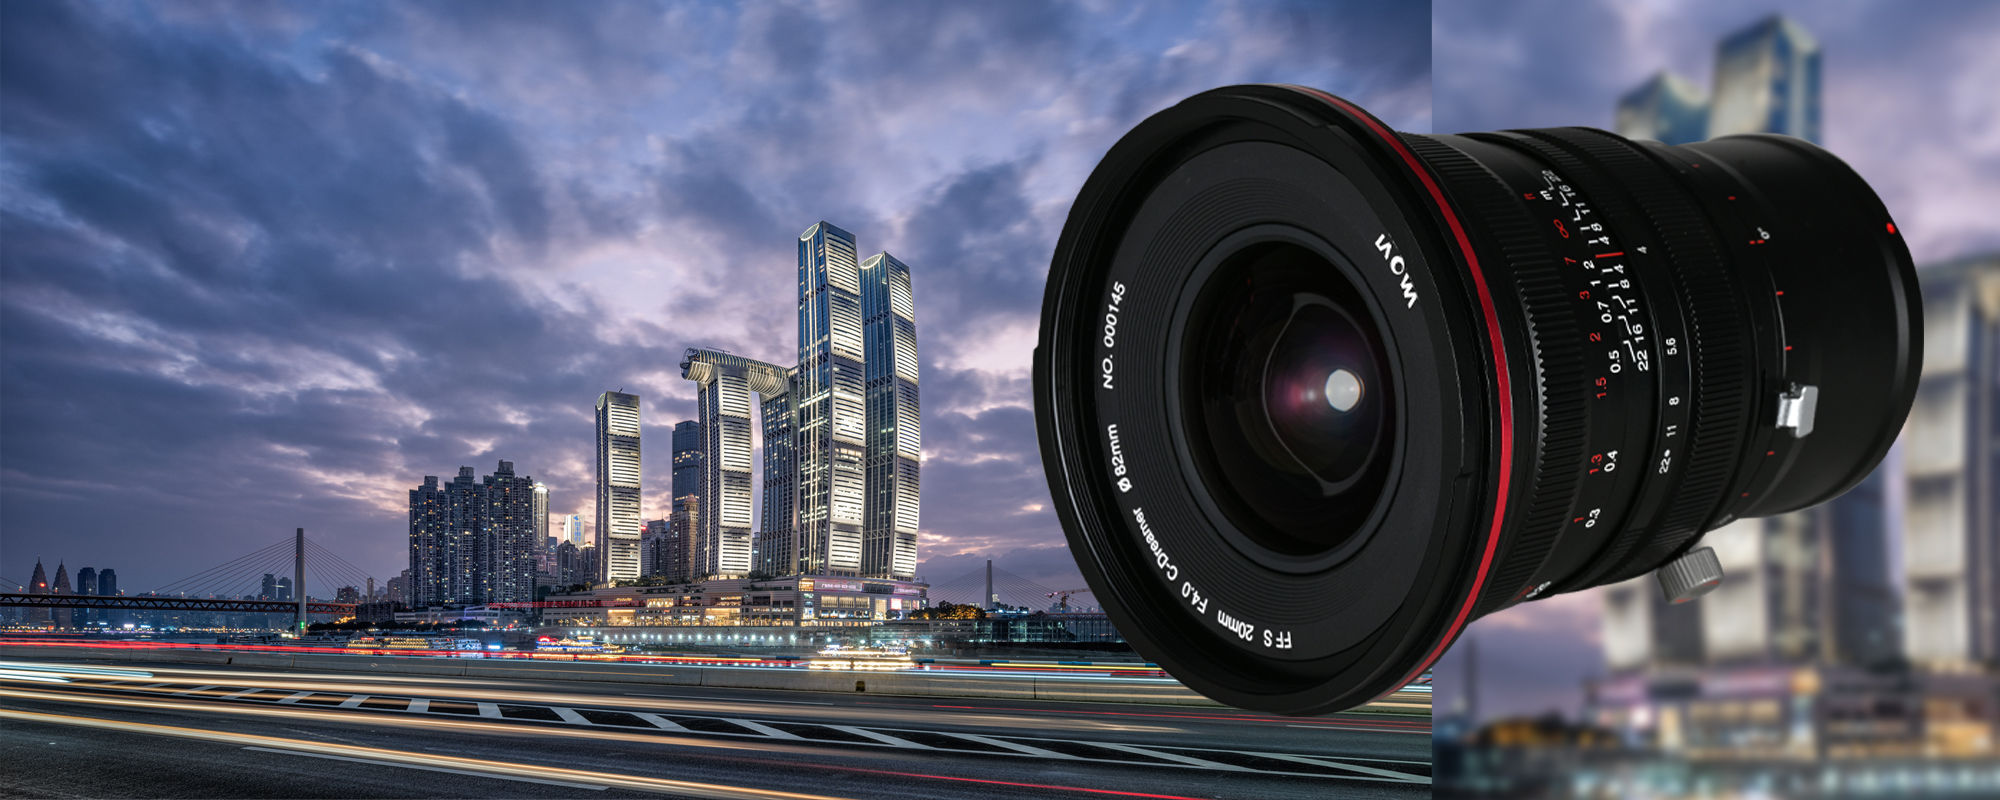 Venus Optics Laowa 20mm f_4.0 Zero-D Shift lens for Nikon F